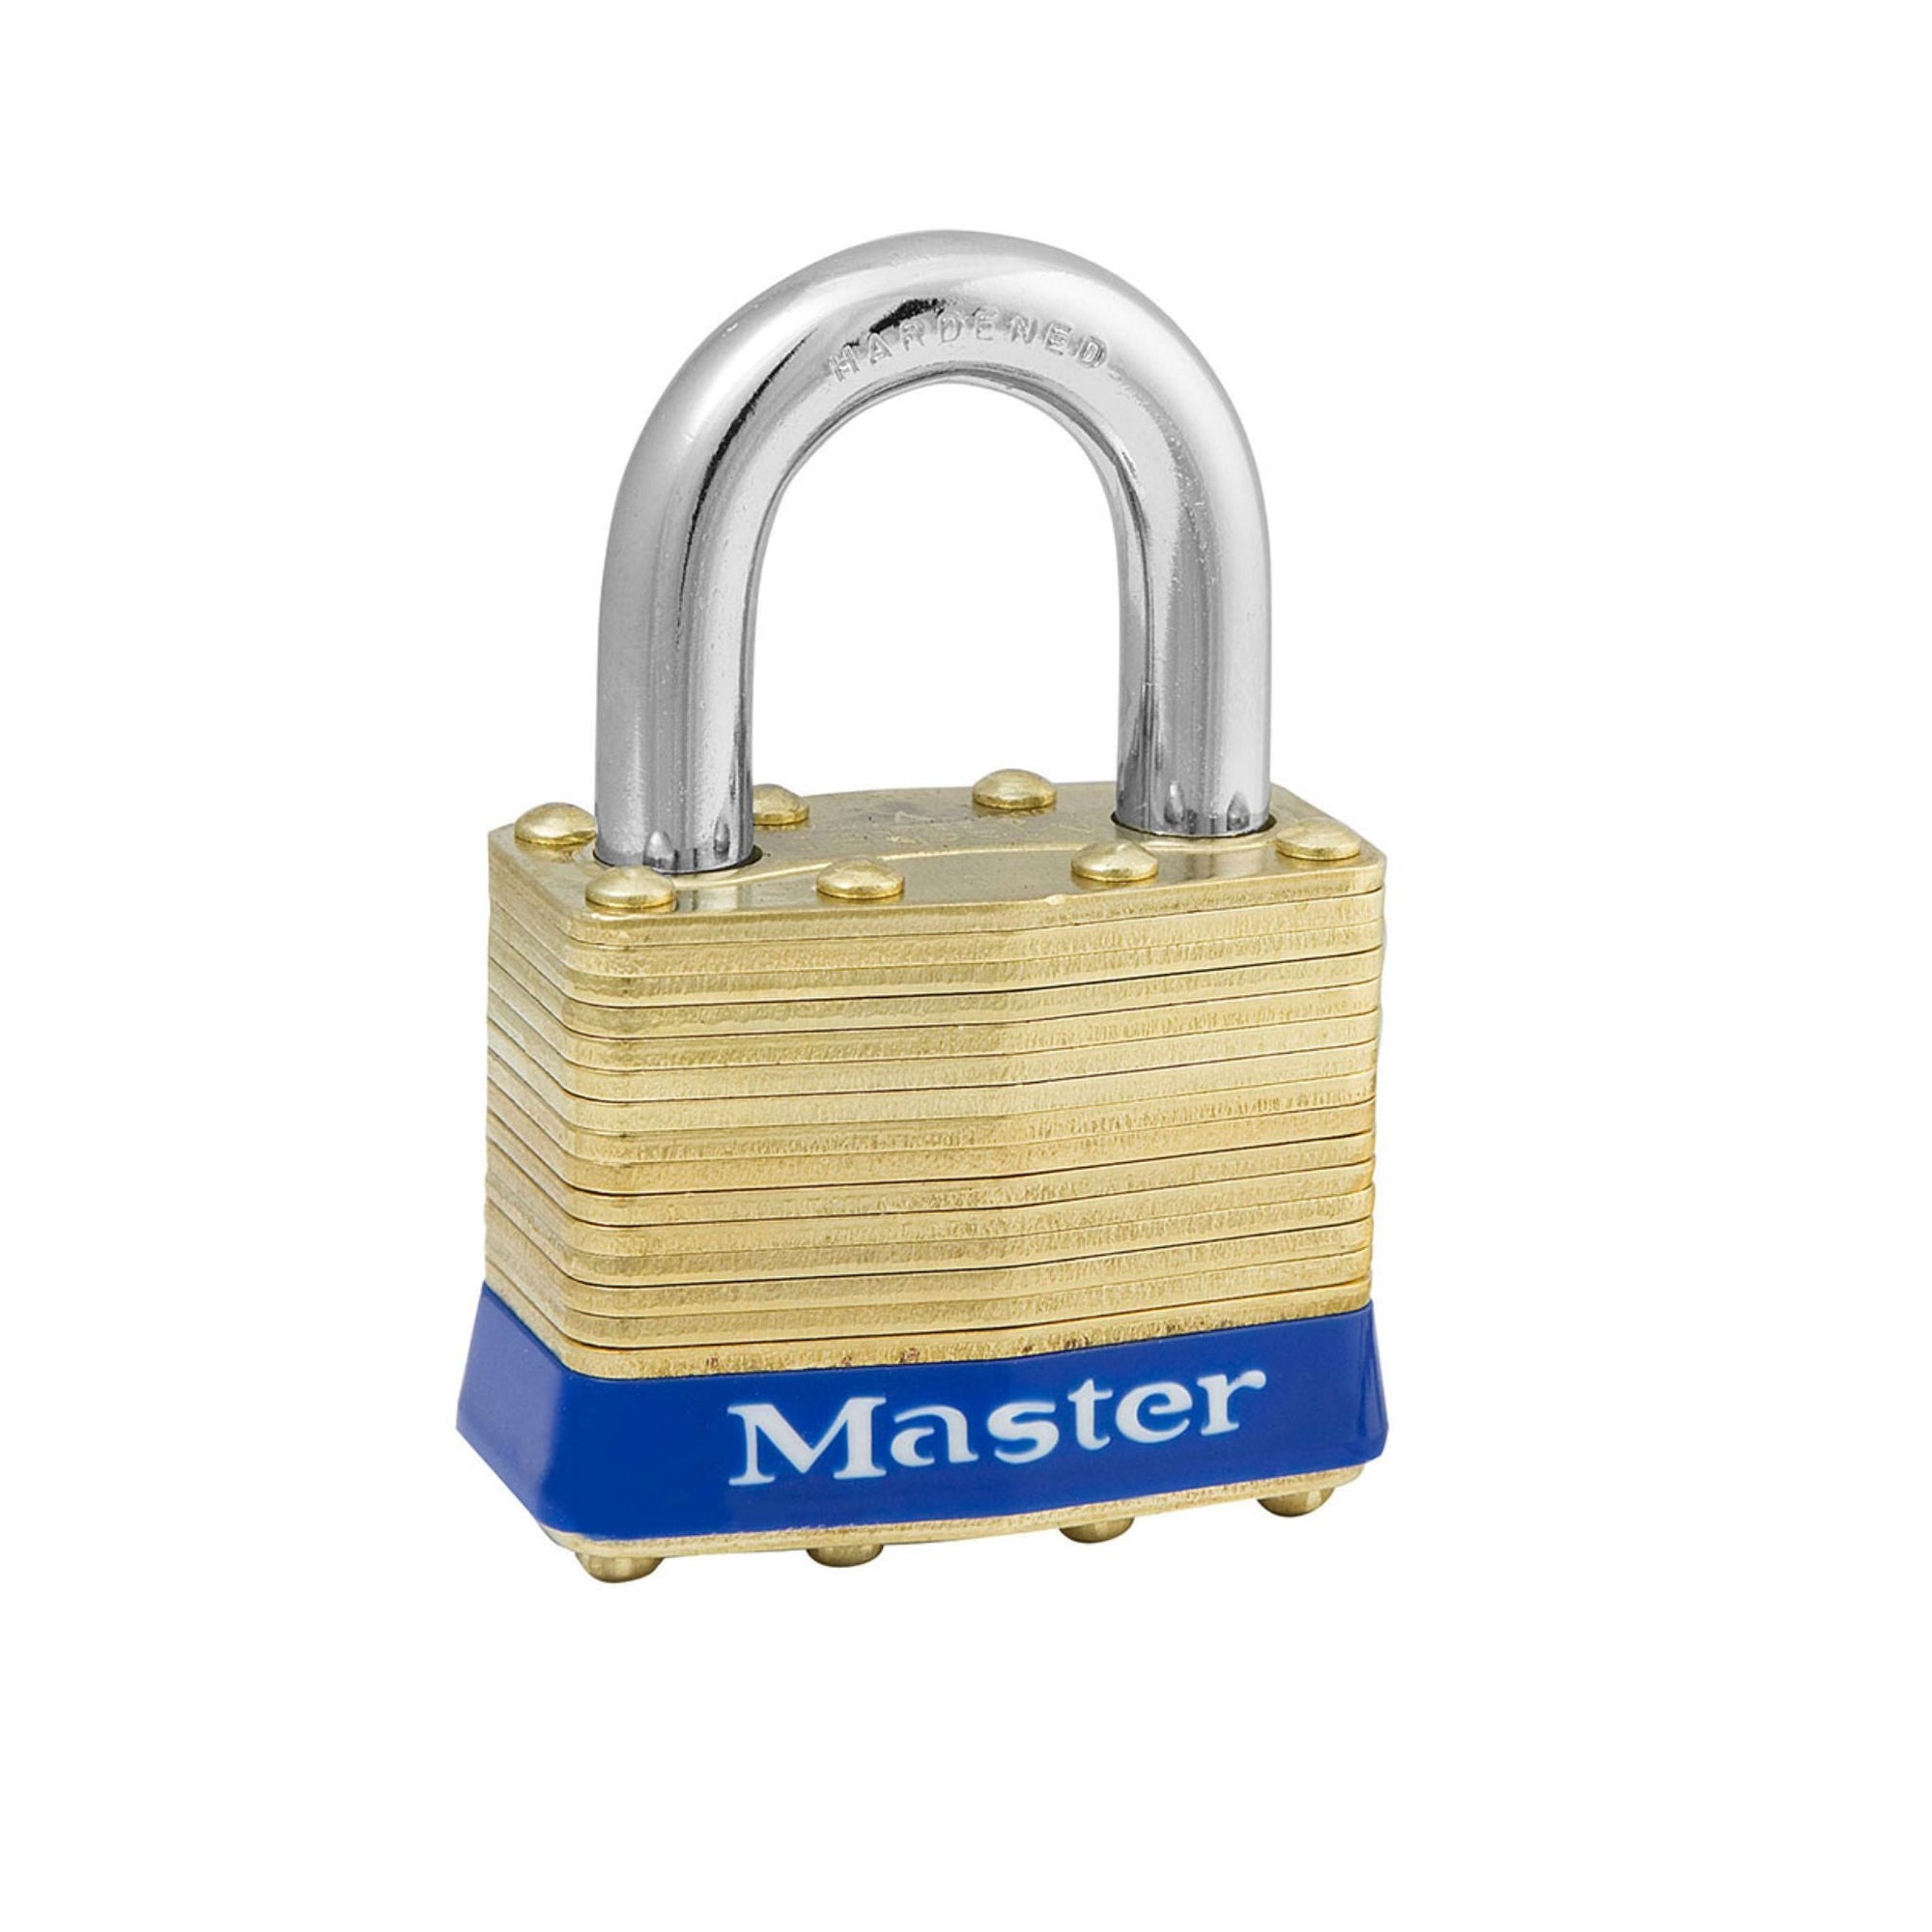 Master Lock 2KA 0321 Lock Laminated brass No. 2 Series Padlock Keyed to Match Existing Key Number KA0321 - The Lock Source